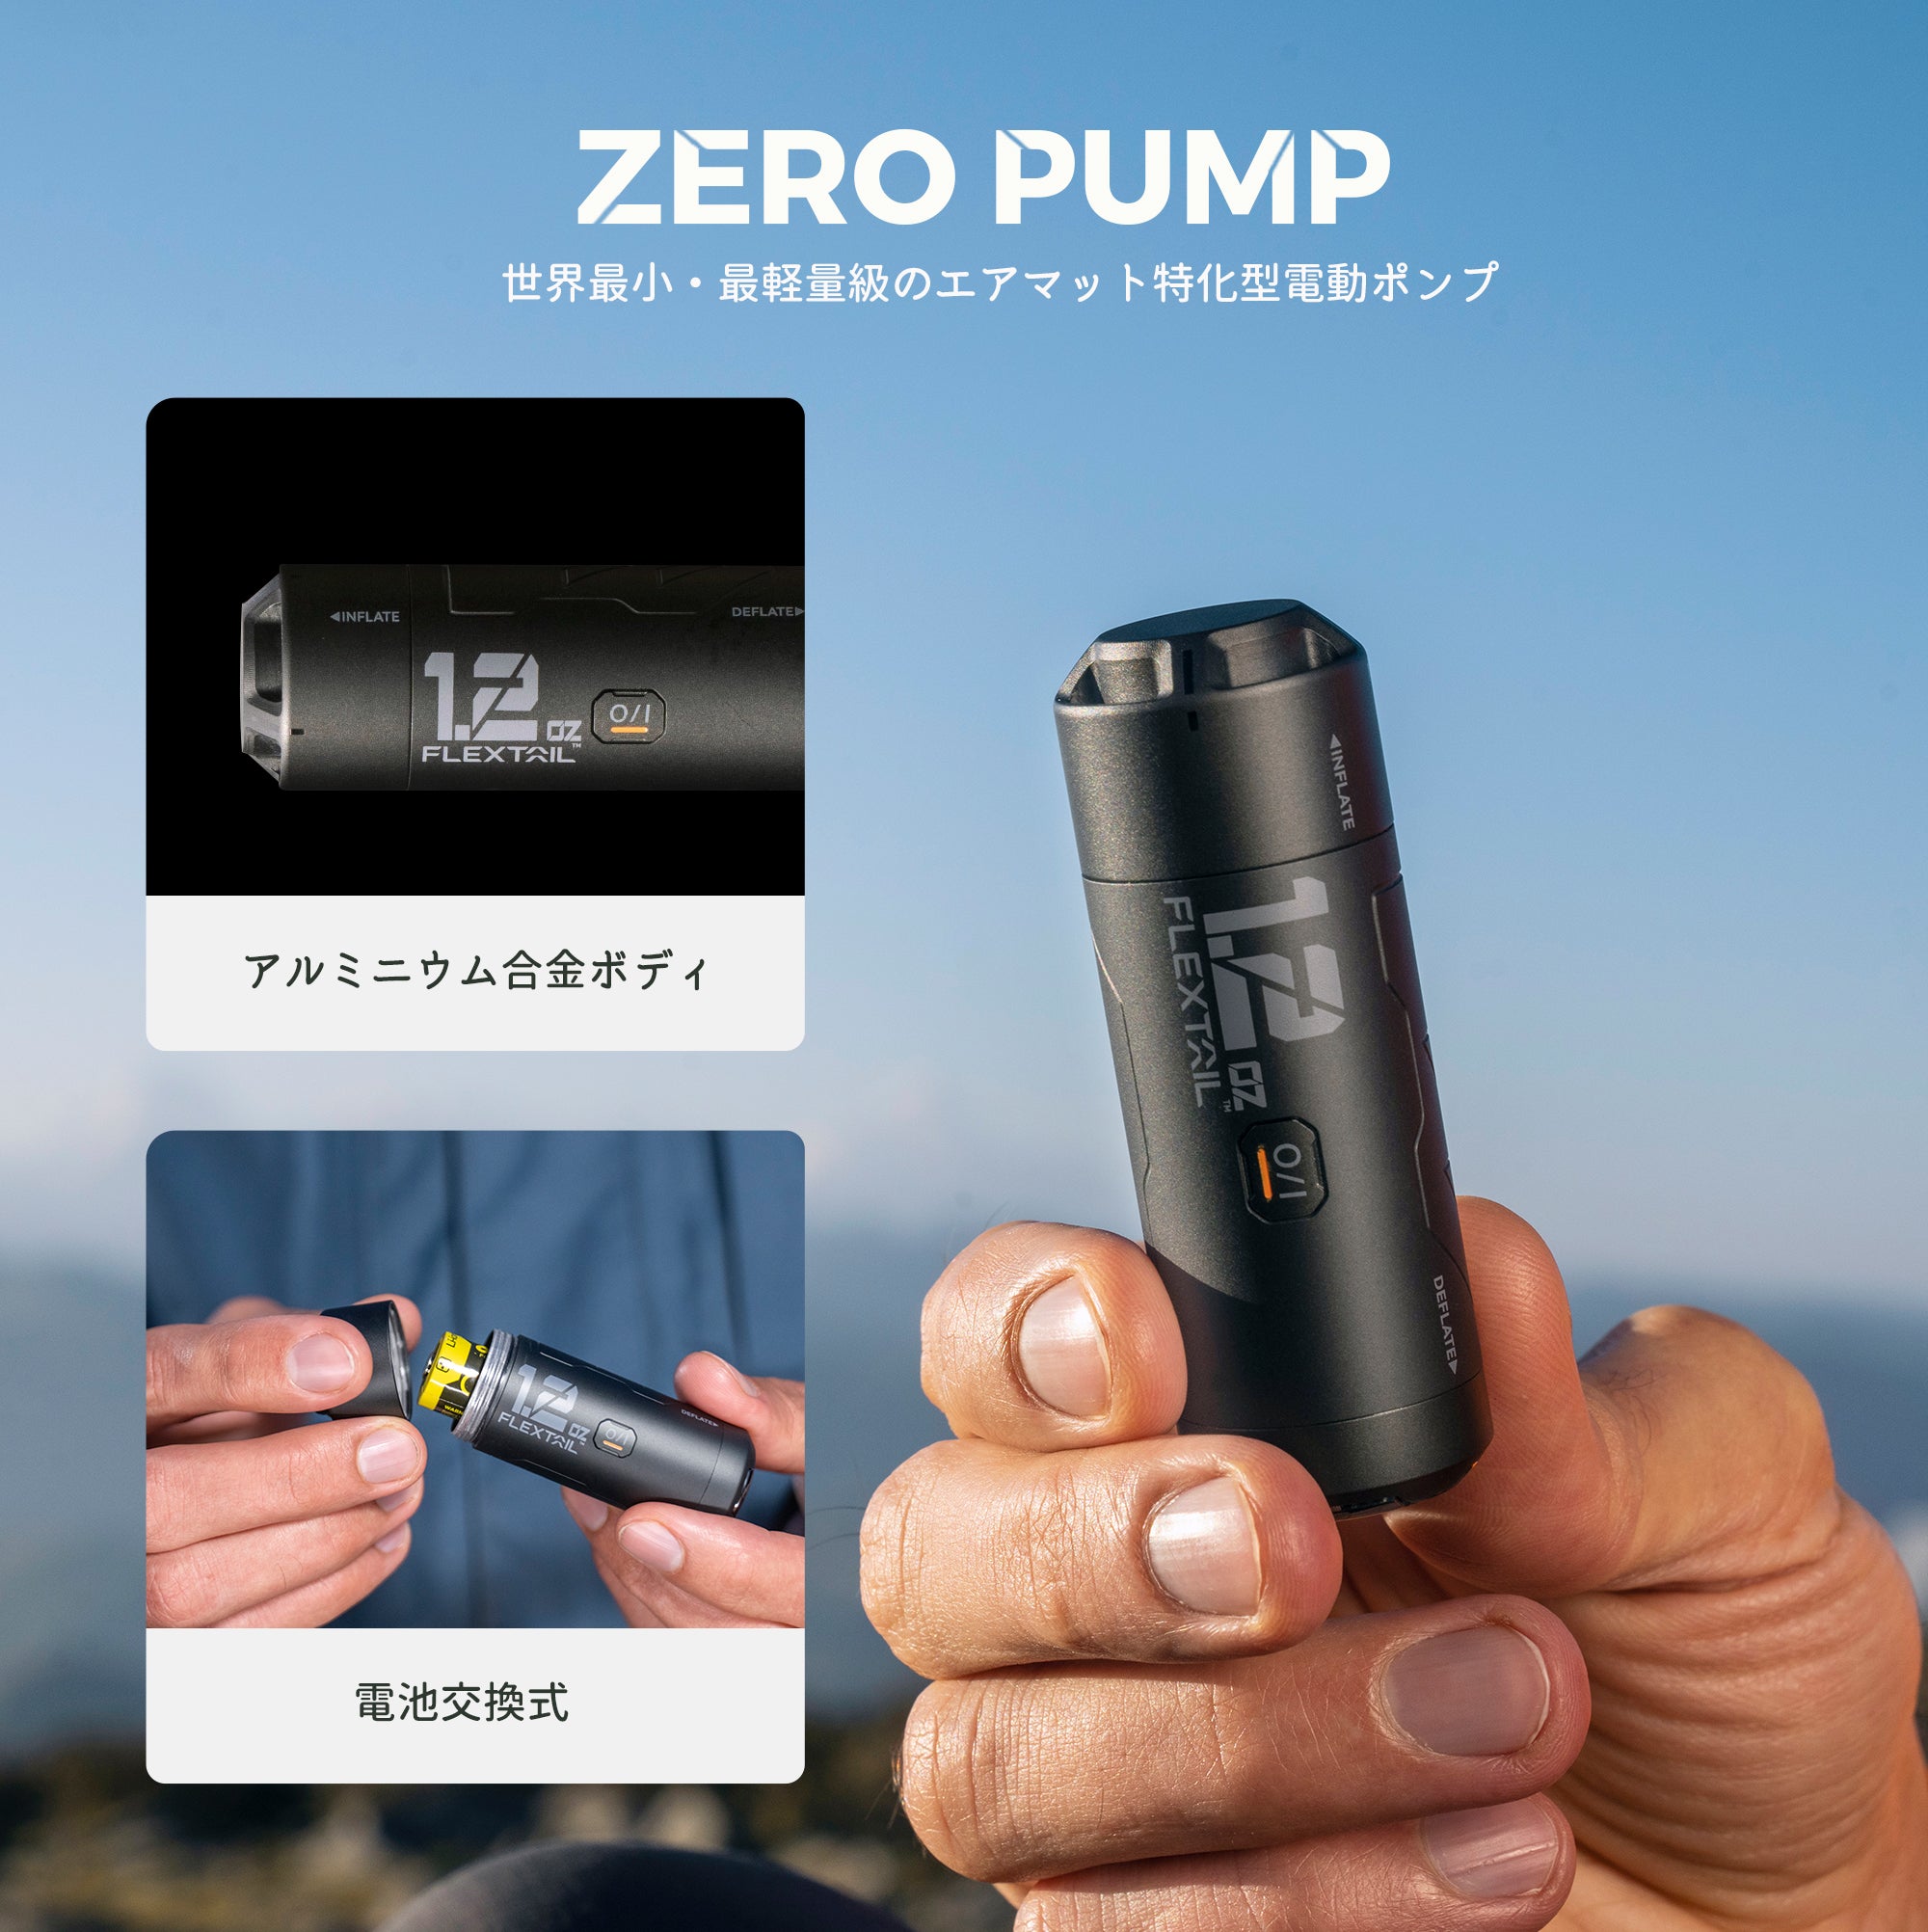 ZERO PUMP-世界最小・最軽量級のエアマット特化型電動ポンプ – FLEXTAIL-JP